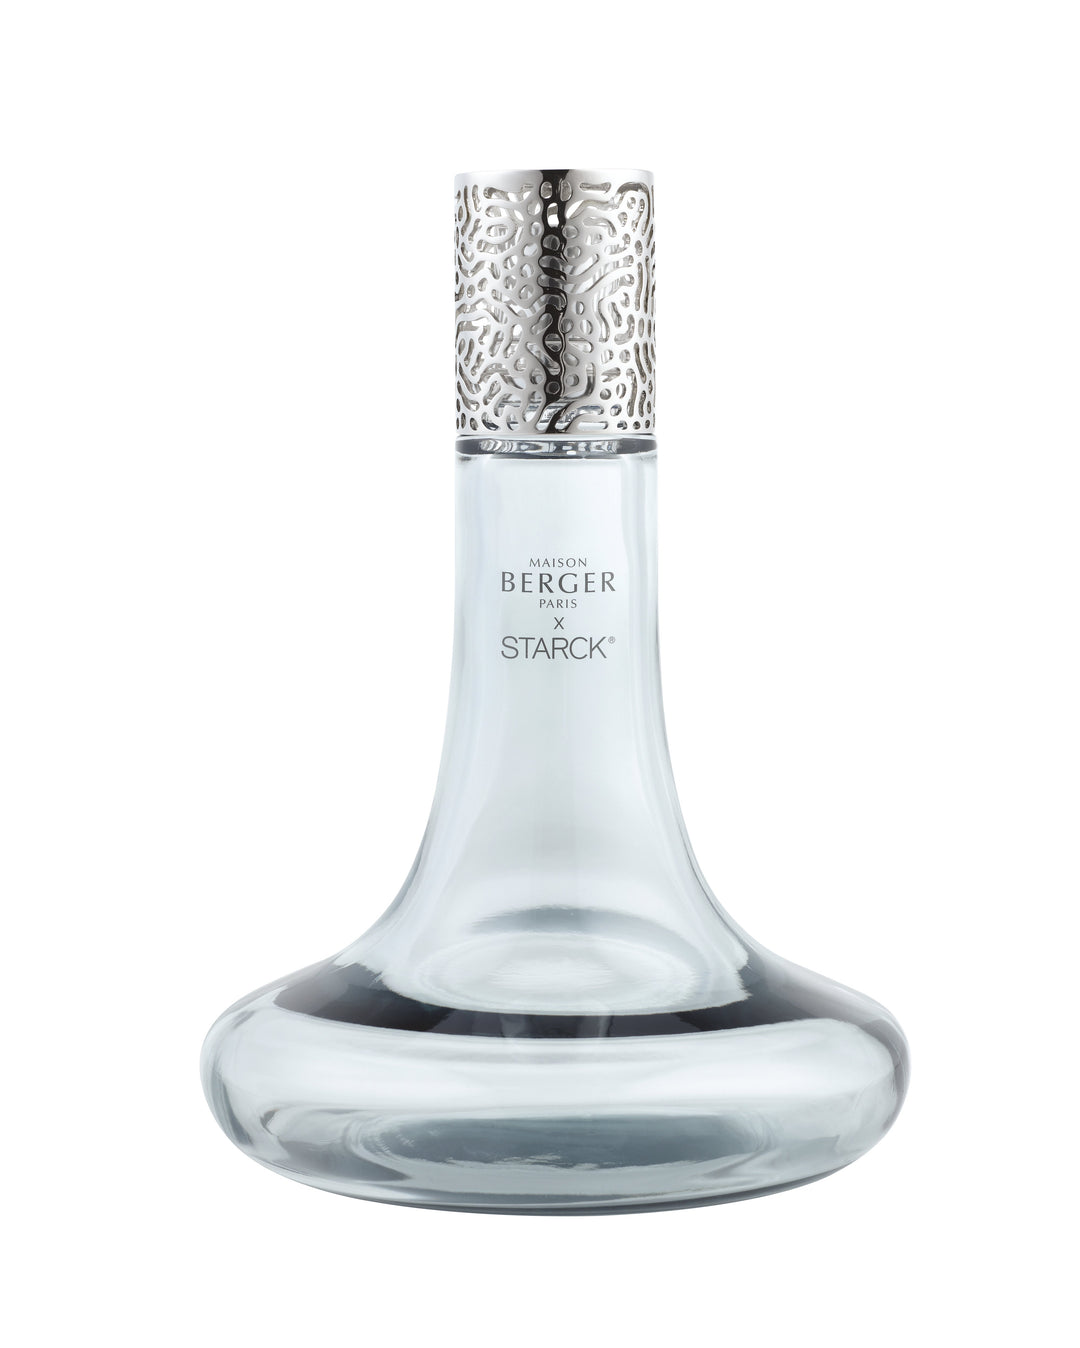 Maison Berger Starck Home Fragrance Lamp in Grey